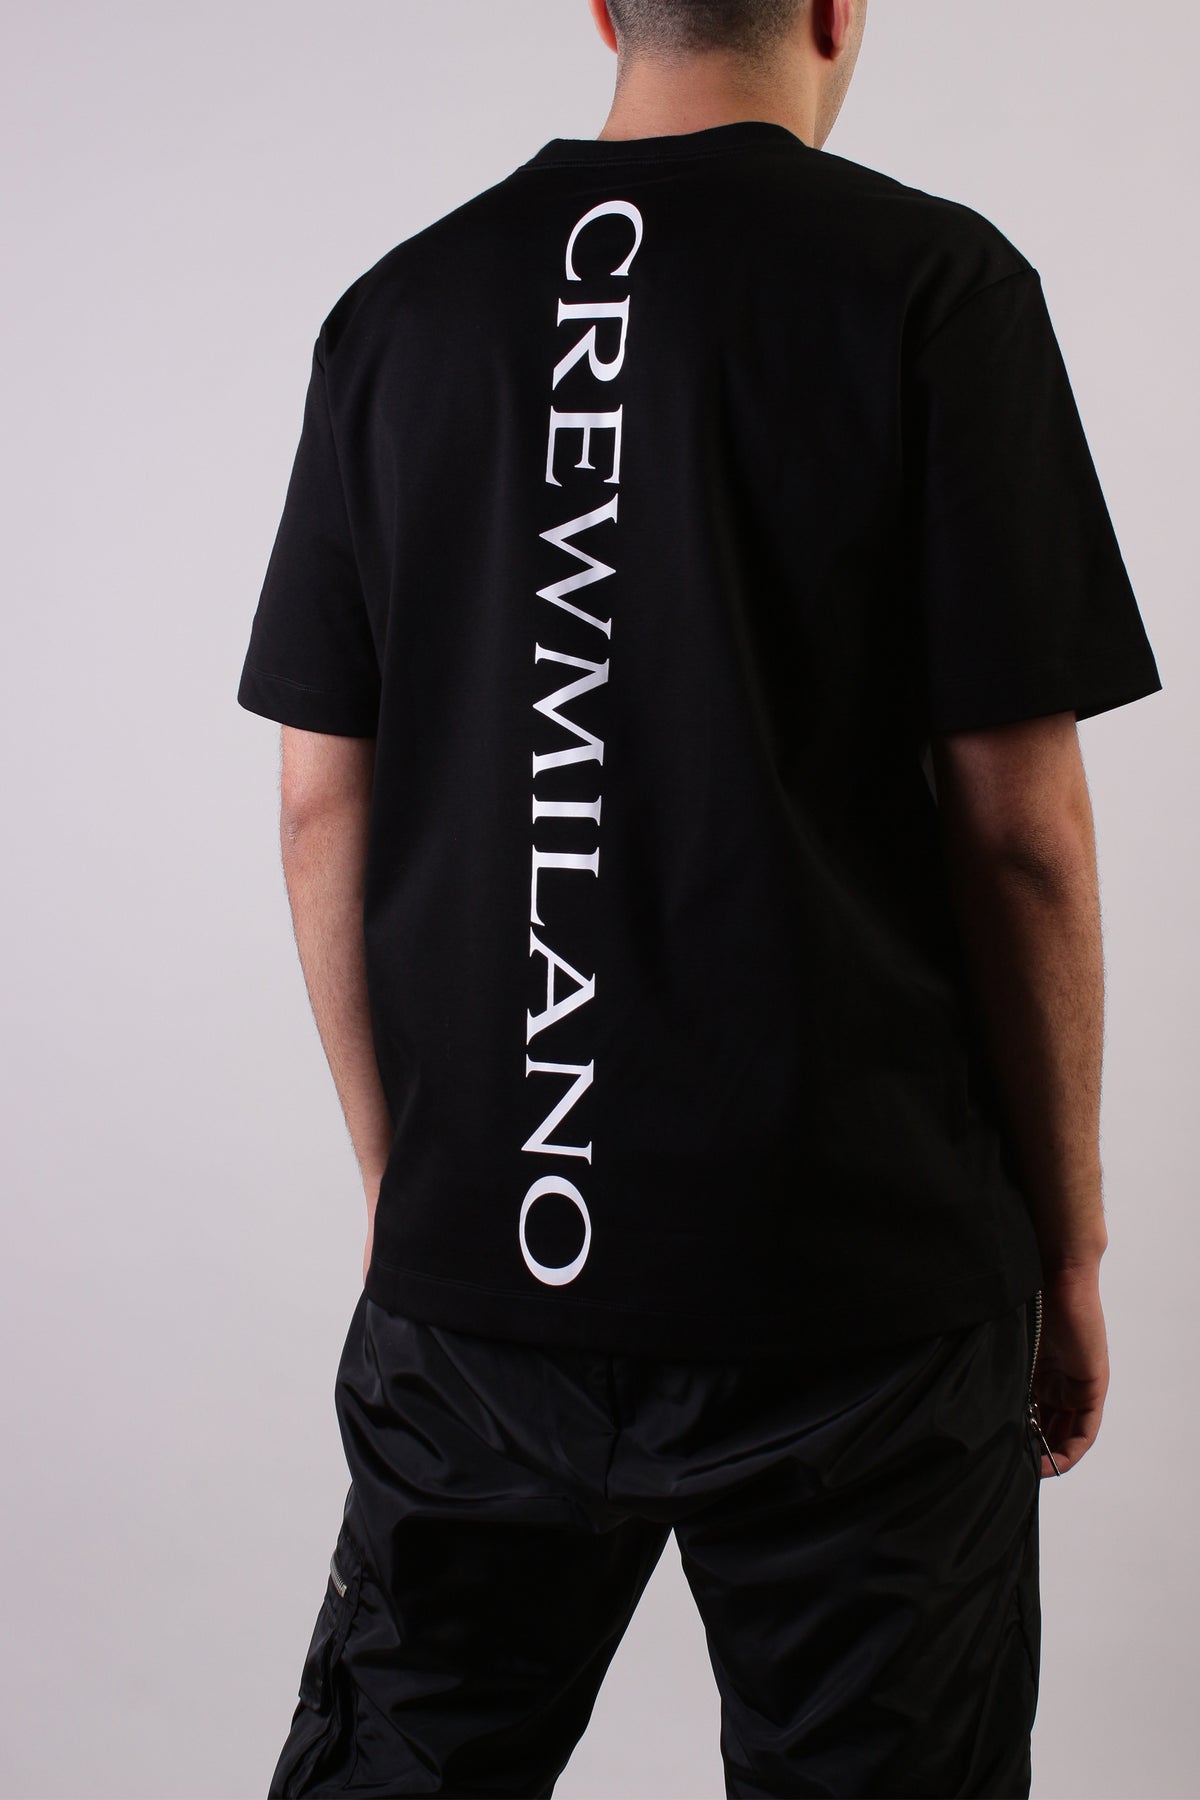 CREW Milano AMSTERDAM Black T-Shirt